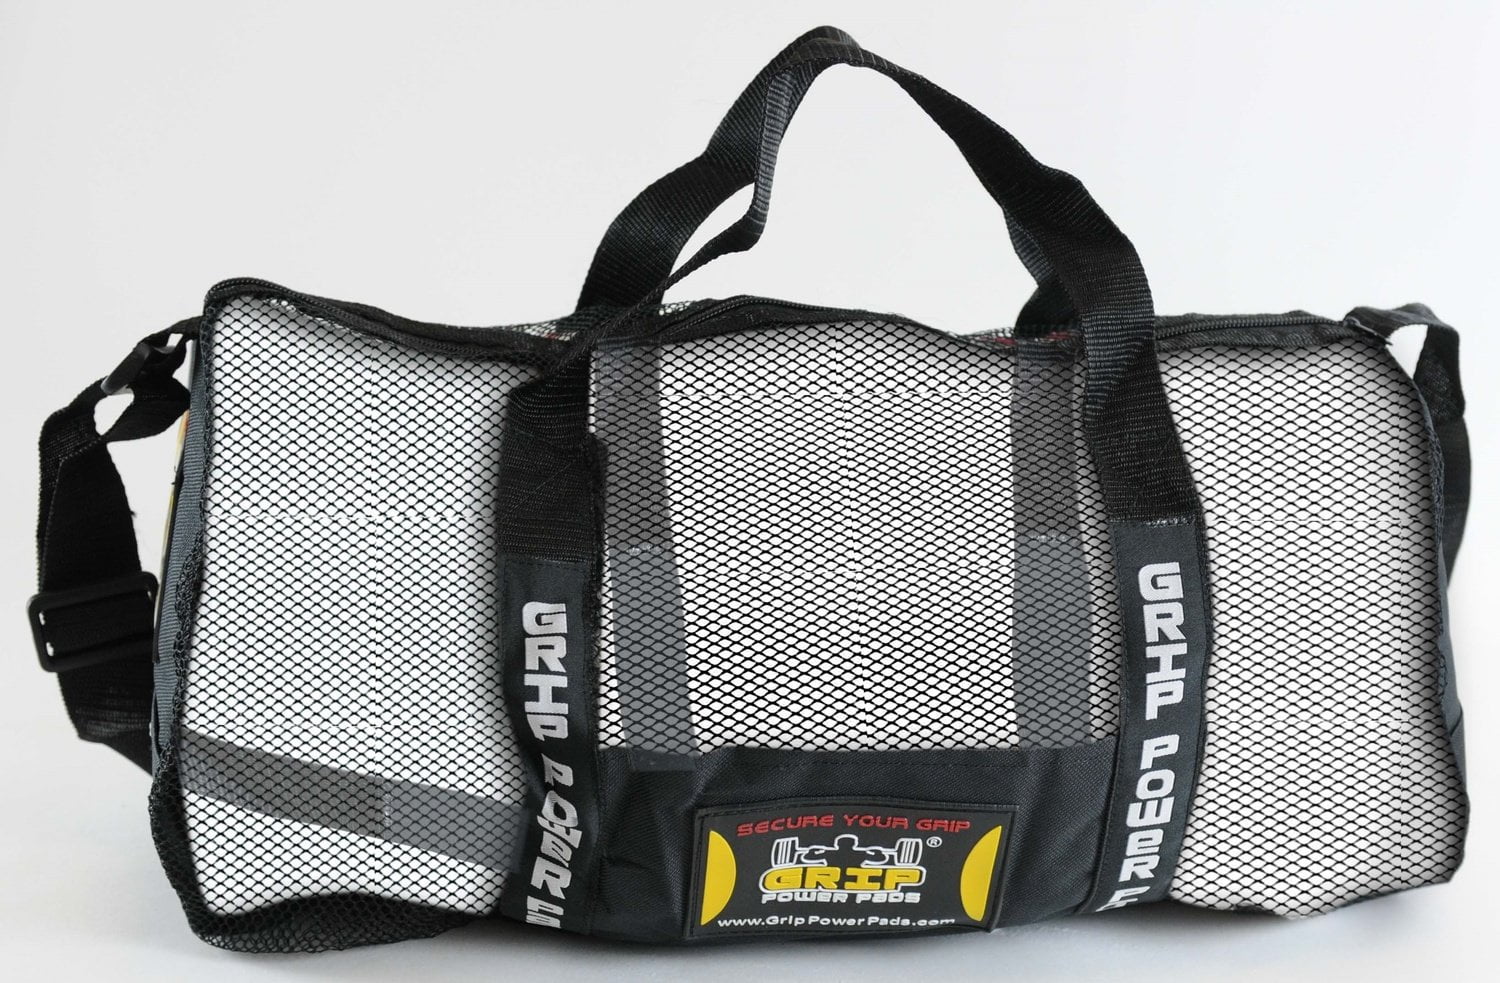 Grip Power Pads Mesh Gear Bag - Multipurpose Gym Bag, Beach Bag Scuba  Diving Bag & More - Adjustable Shoulder Strap (Black, One Size)